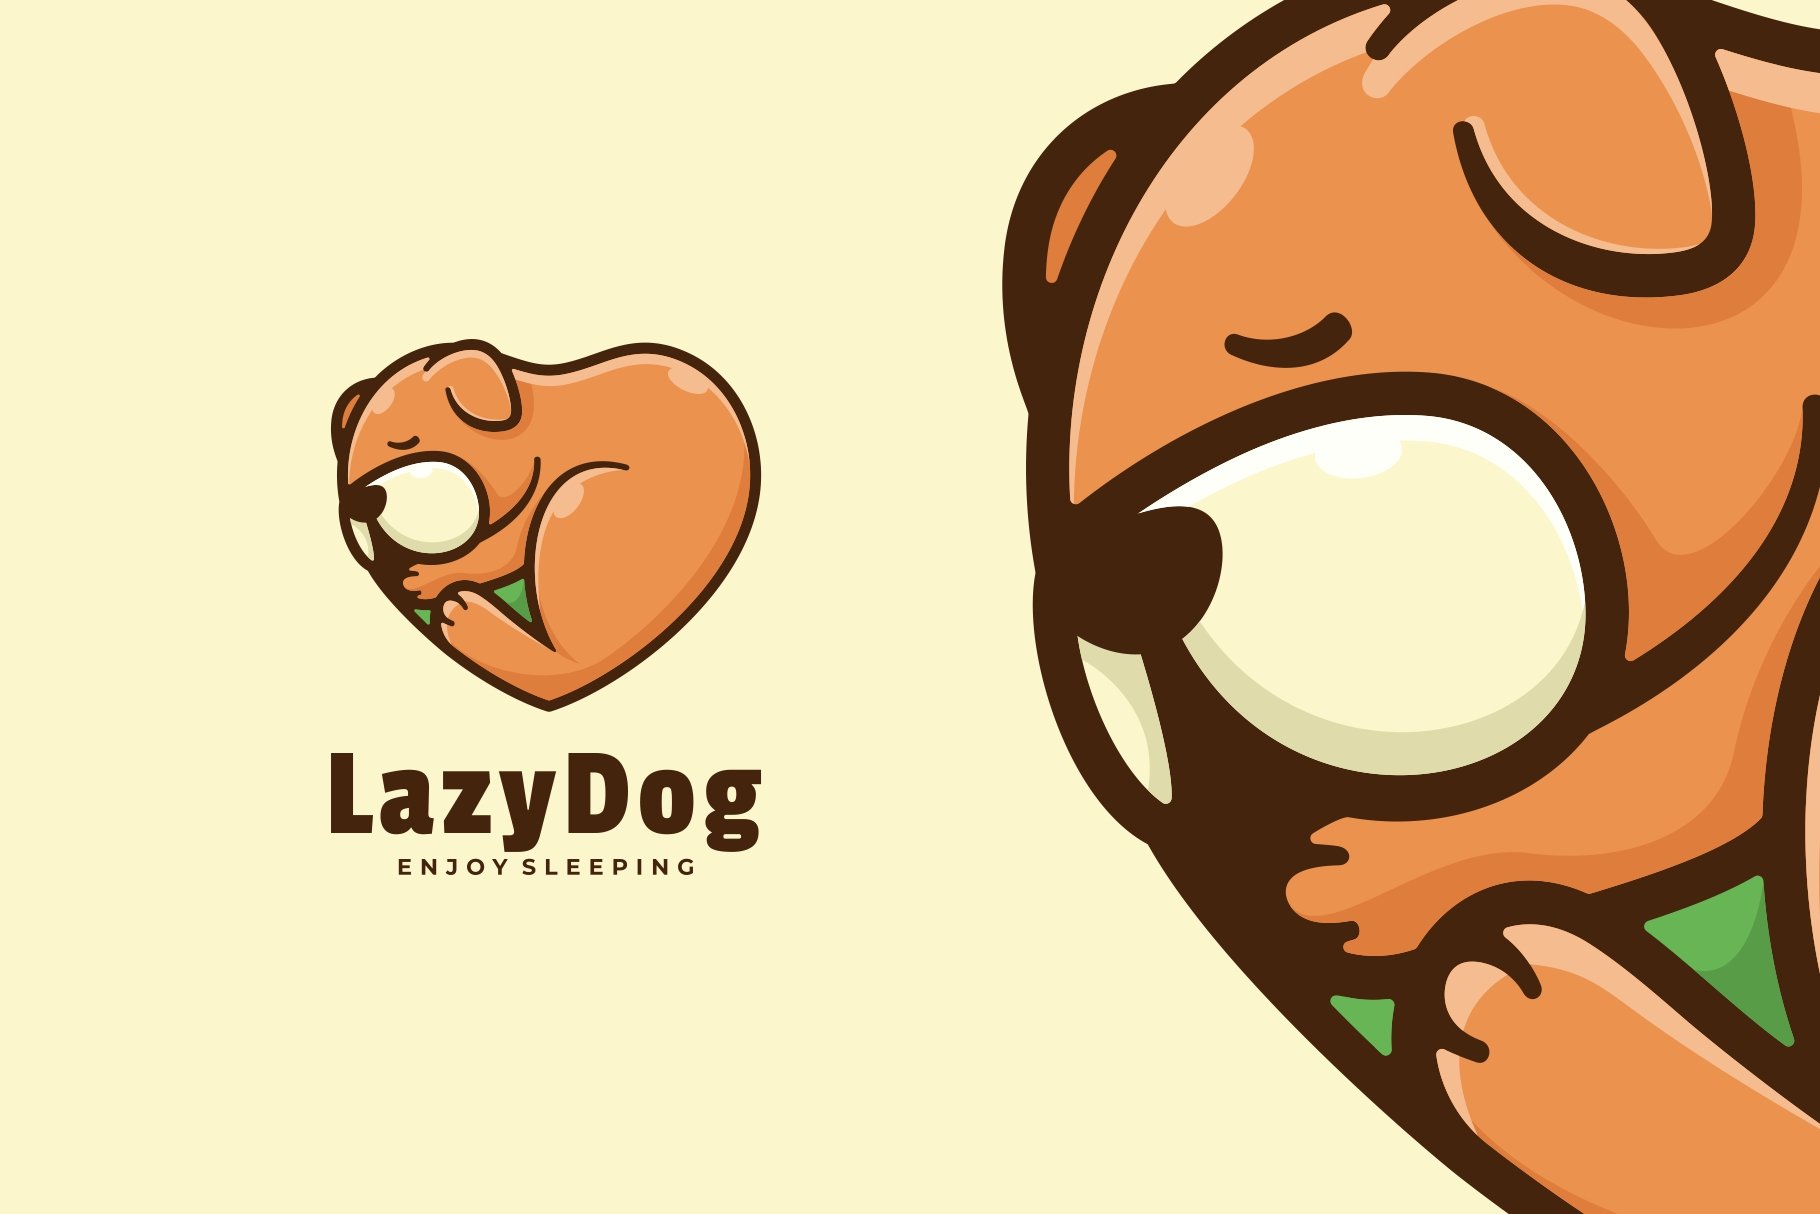 Dog Cartoon Character Logo cover image.